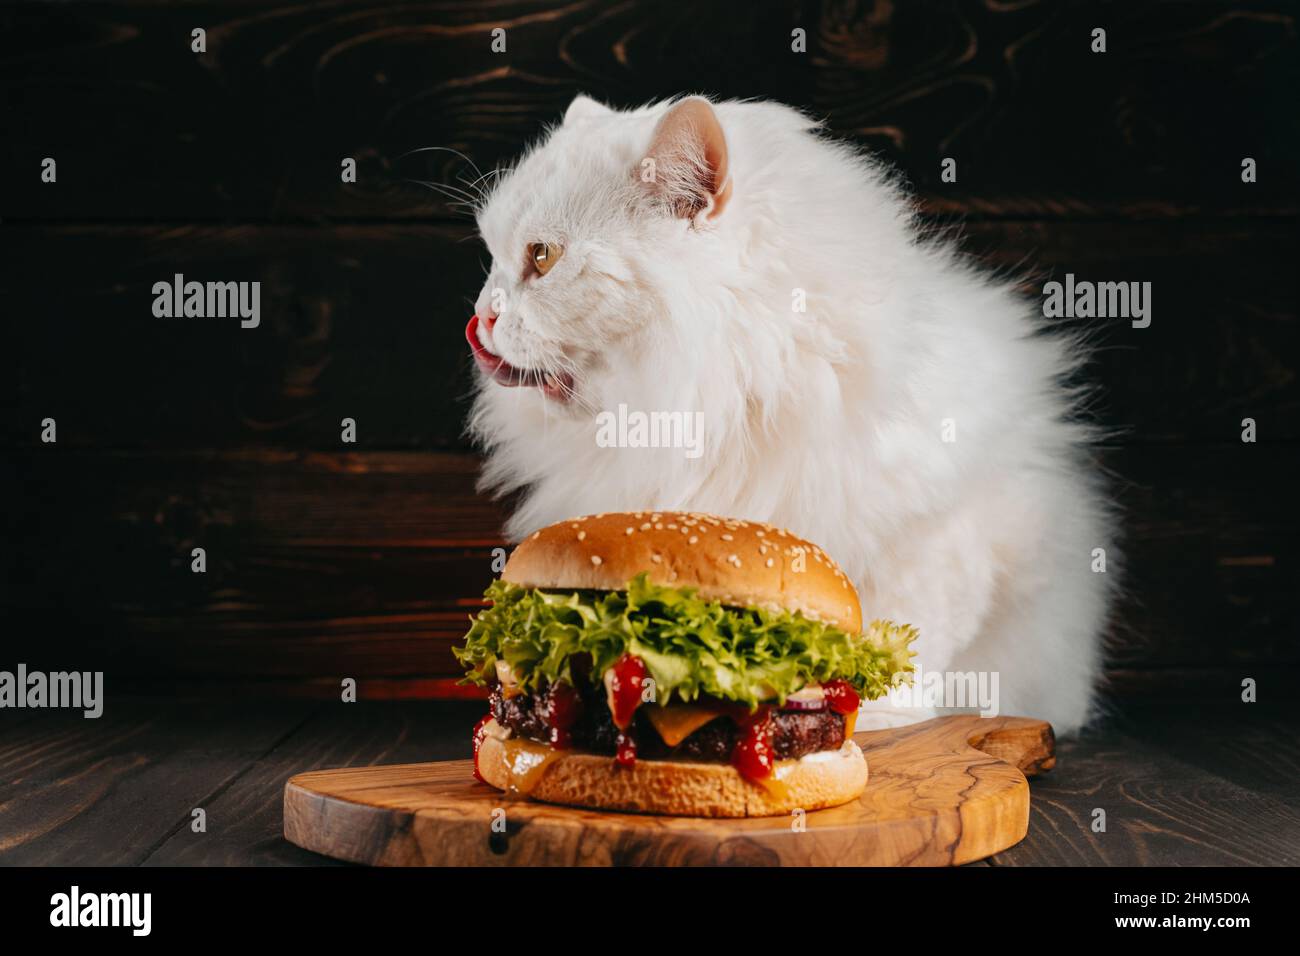 Cat munching on a hamburger